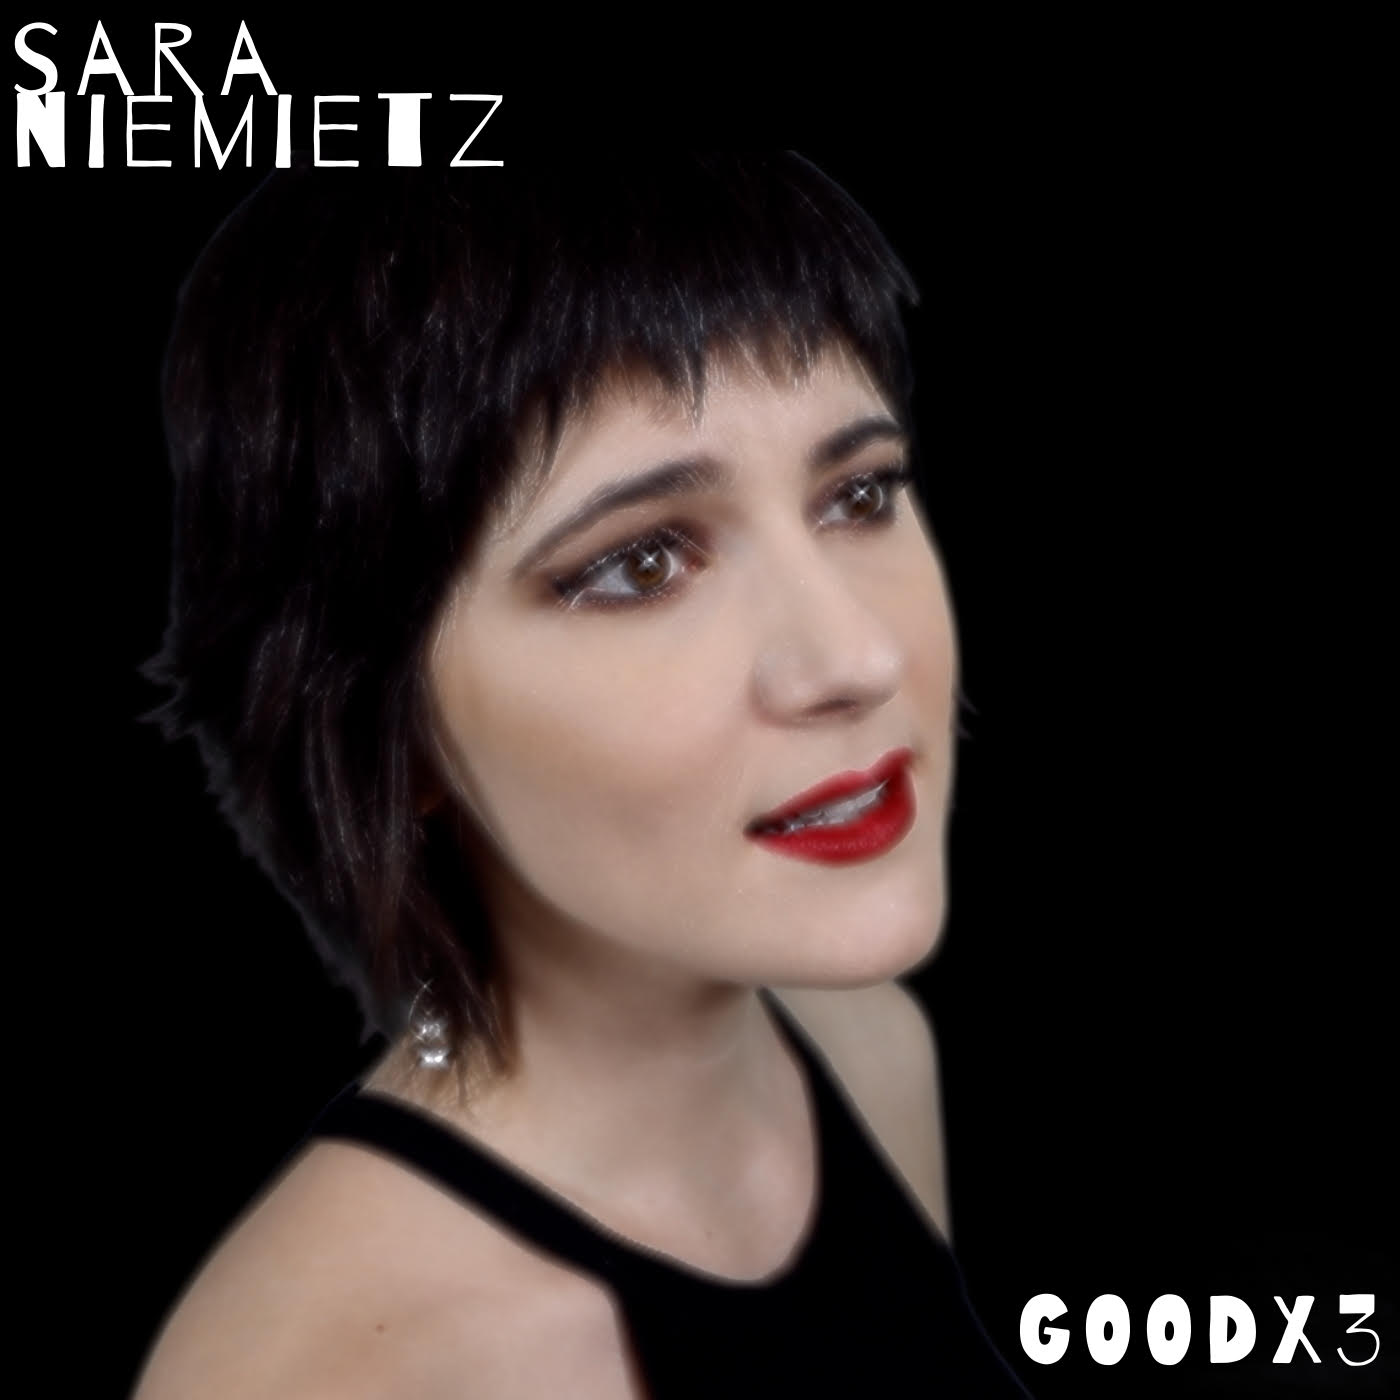 GOODX3 cover art, single by Sara Niemietz